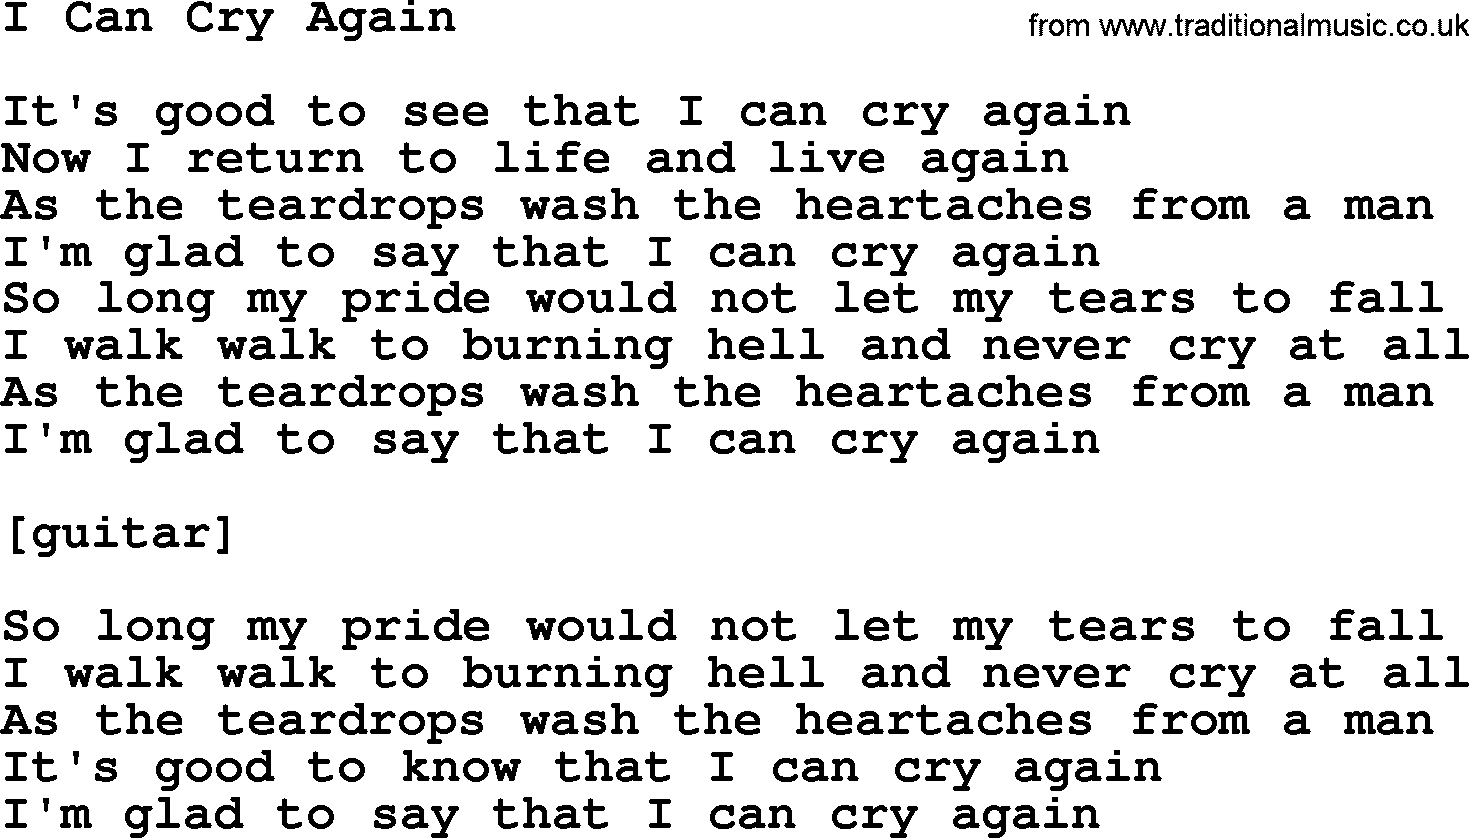 Willie Nelson song: I Can Cry Again lyrics